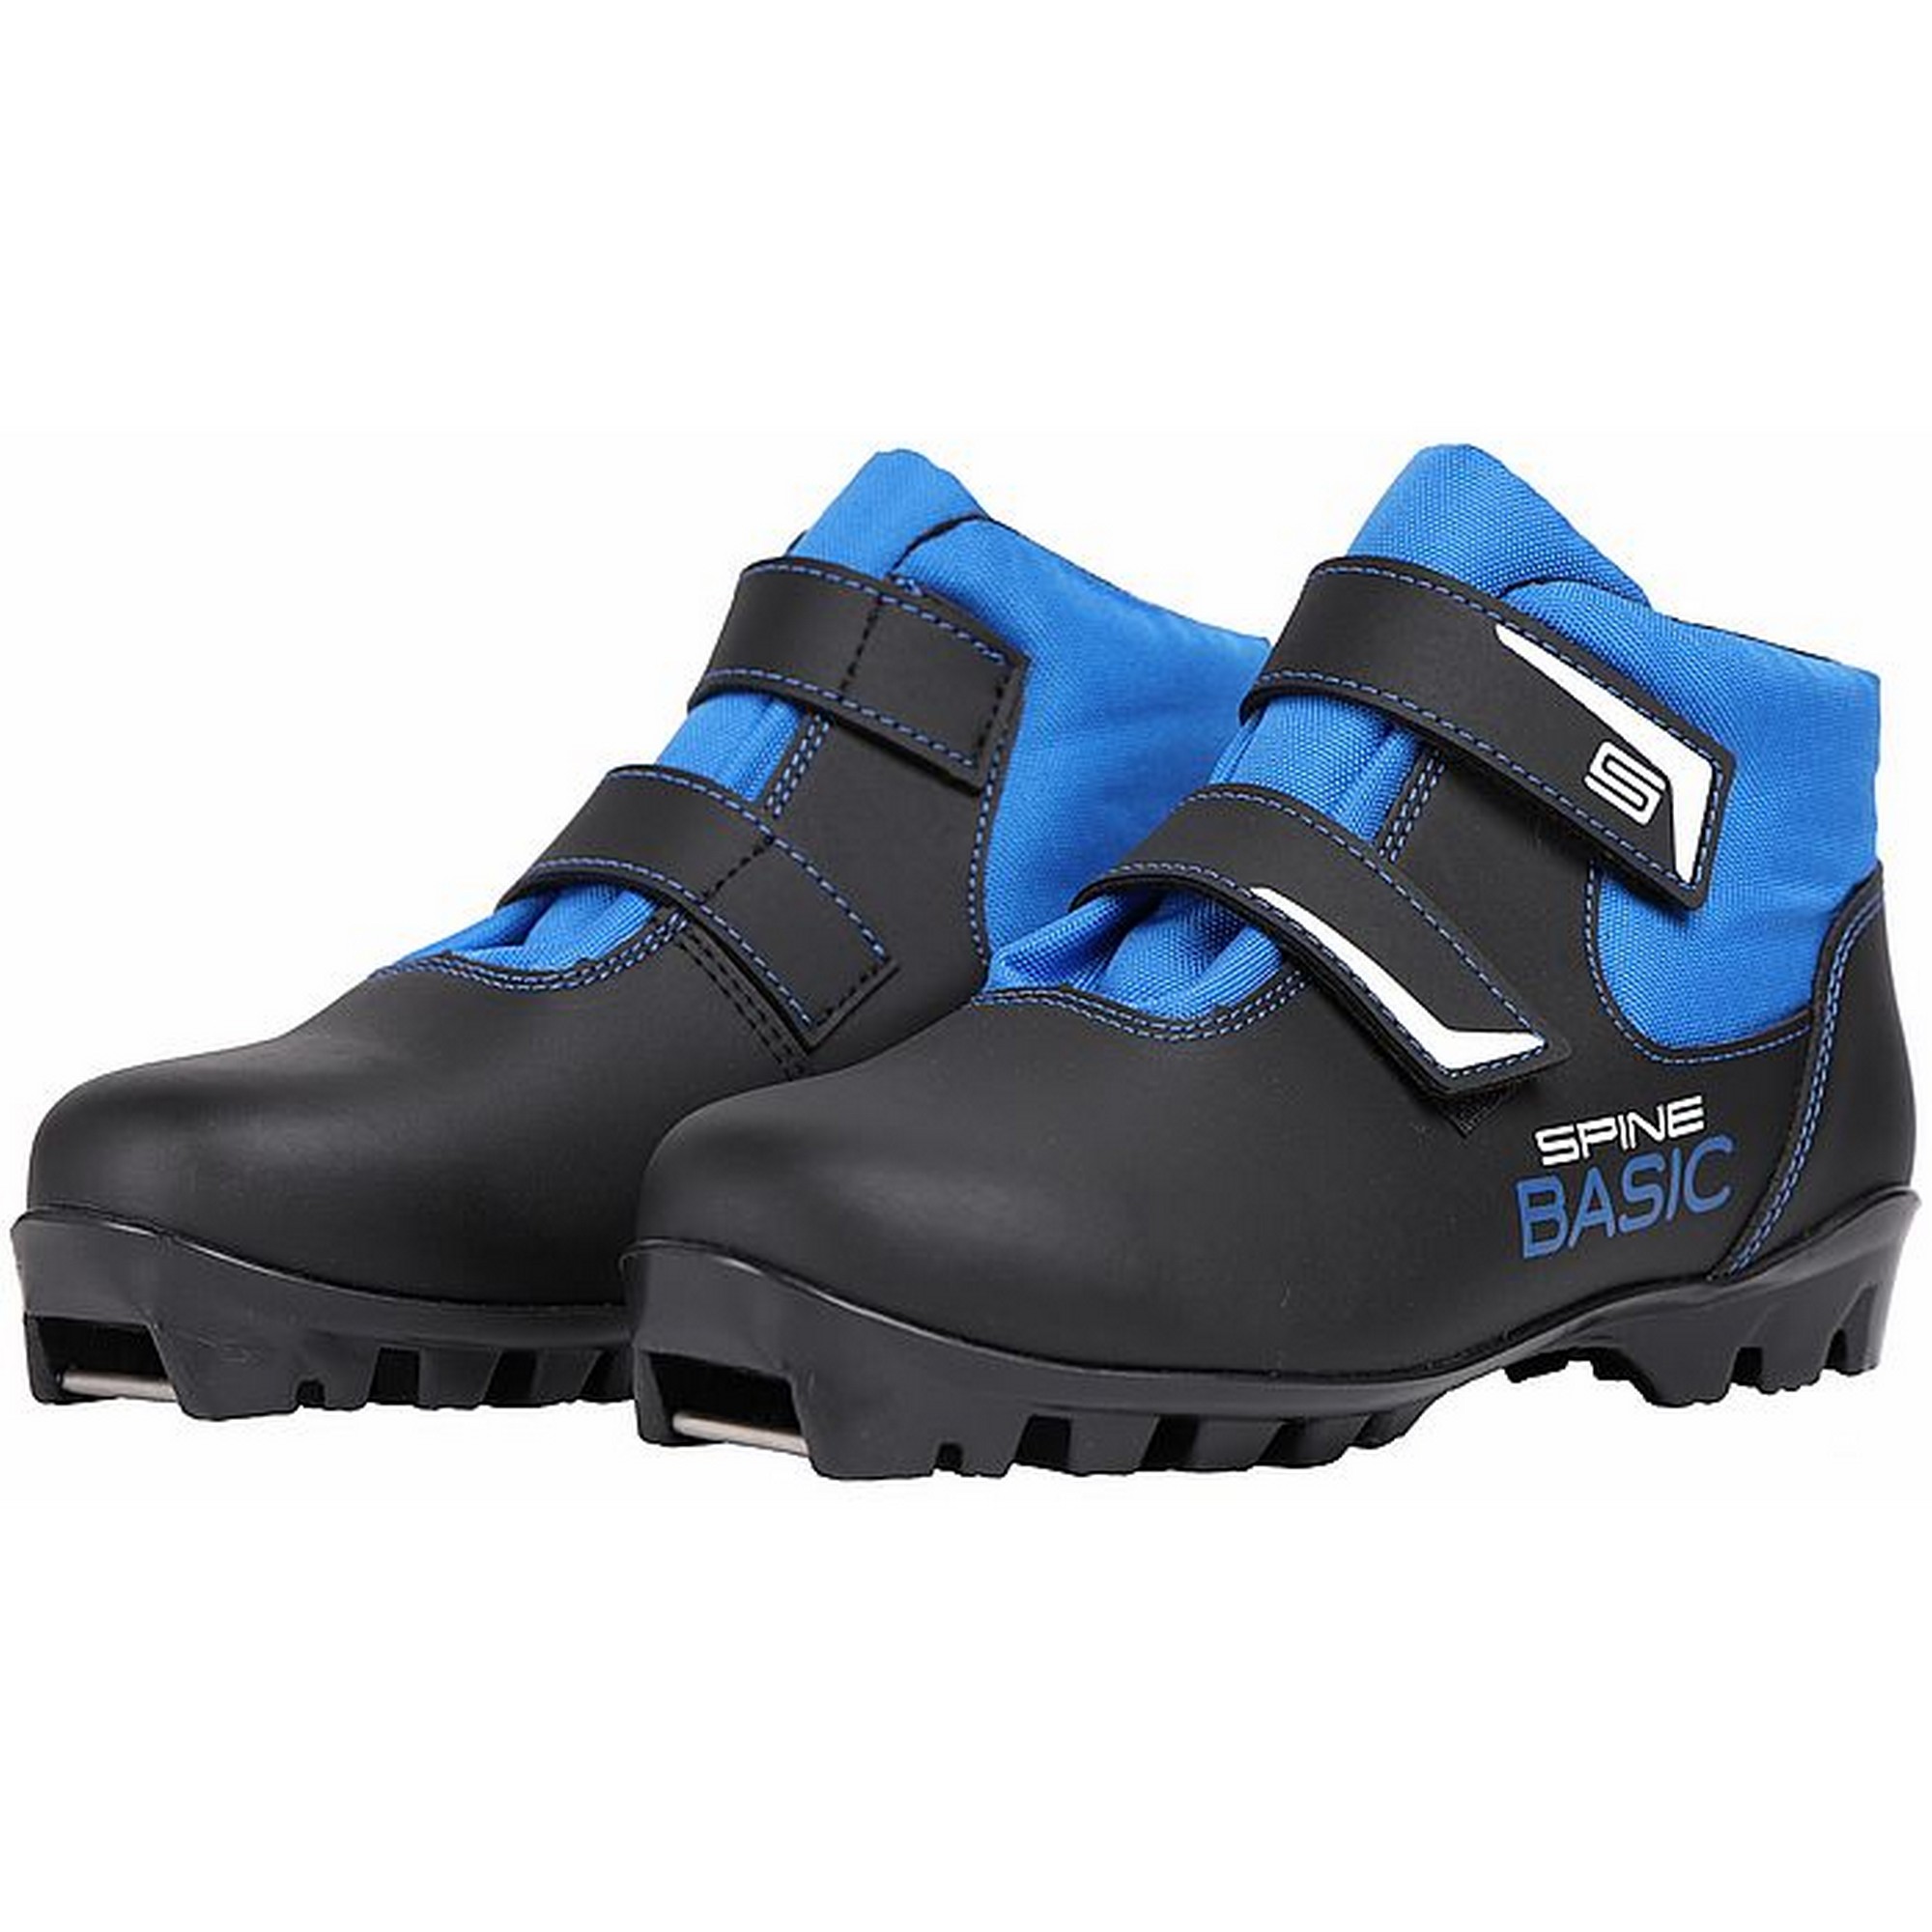 Лыжные ботинки NNN Spine Basic 242 синий 2000_2000